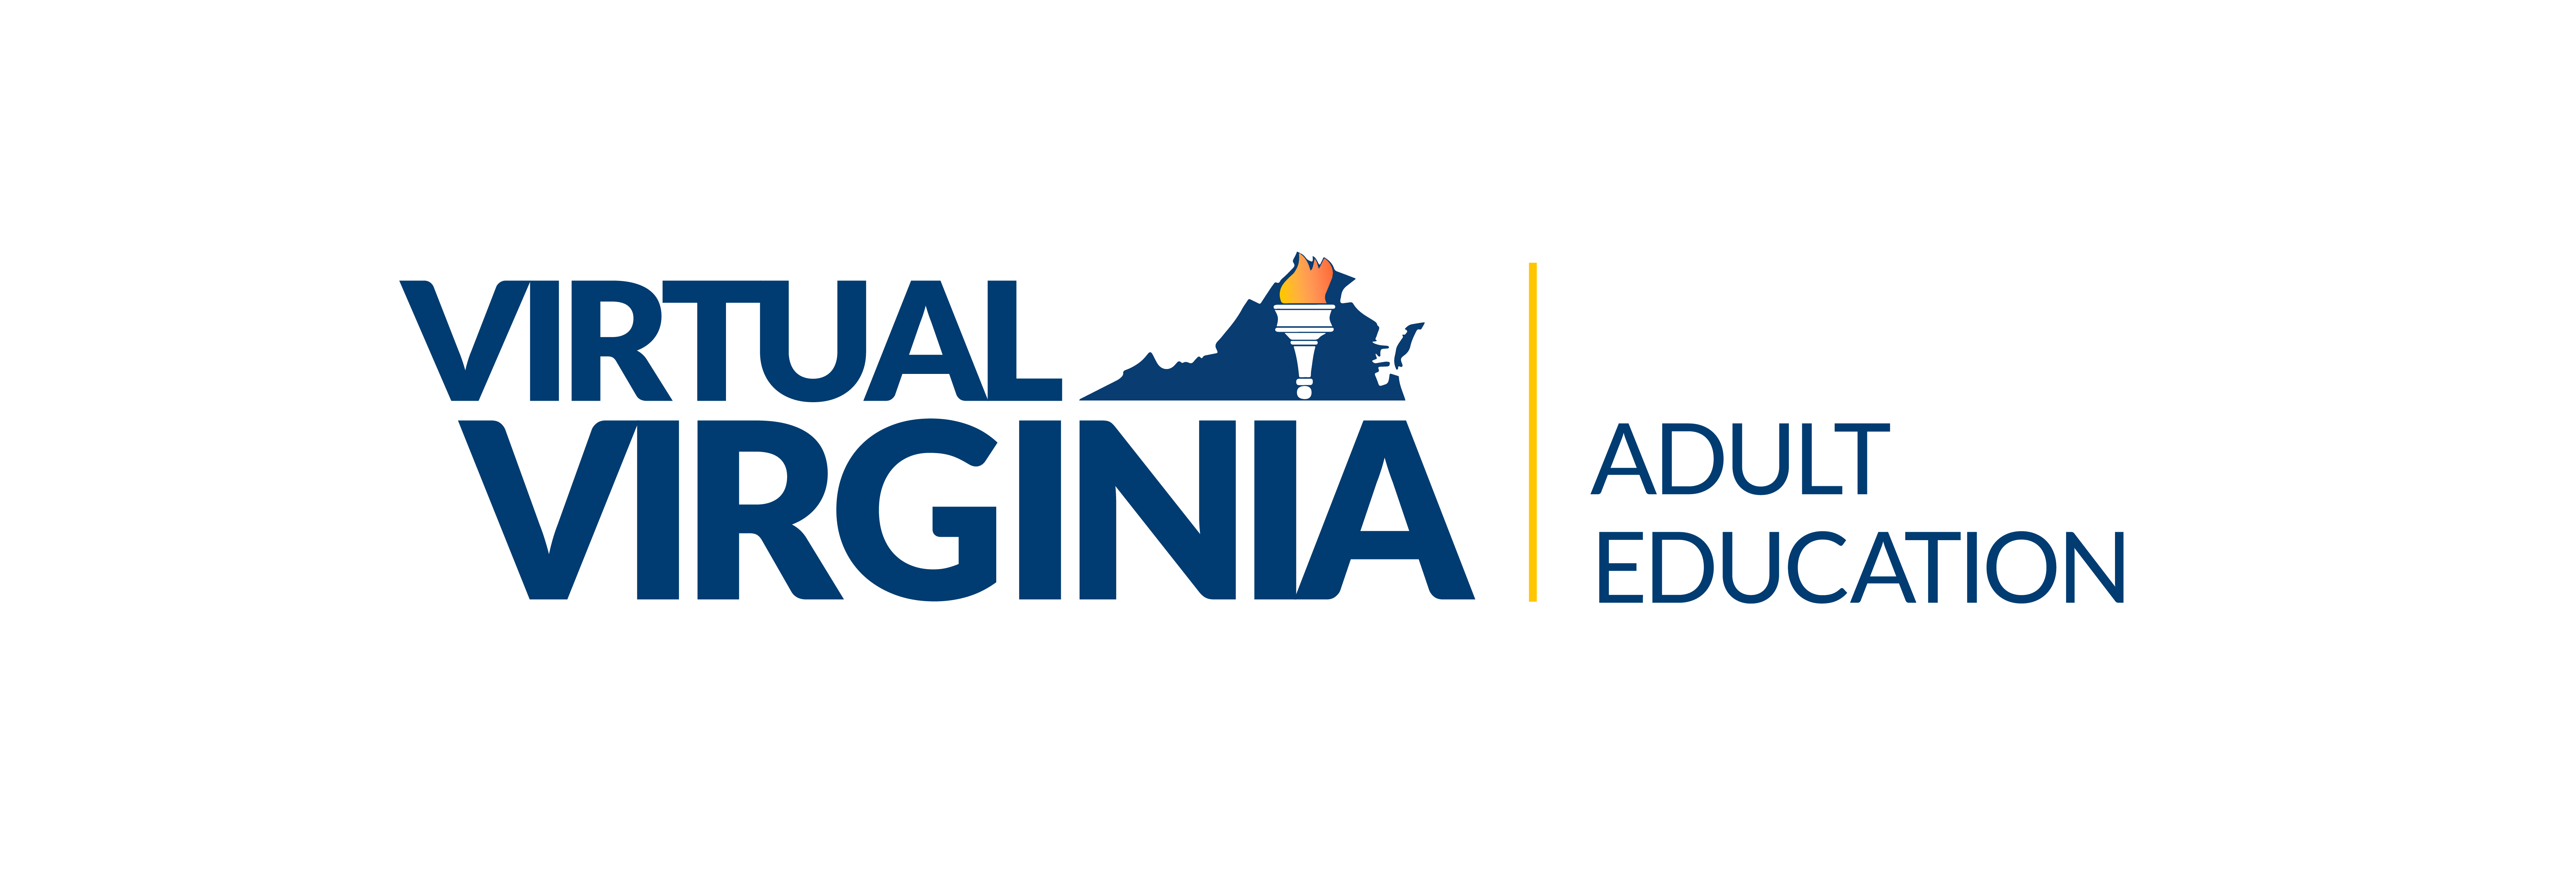 Virtual Virginia Adult Education